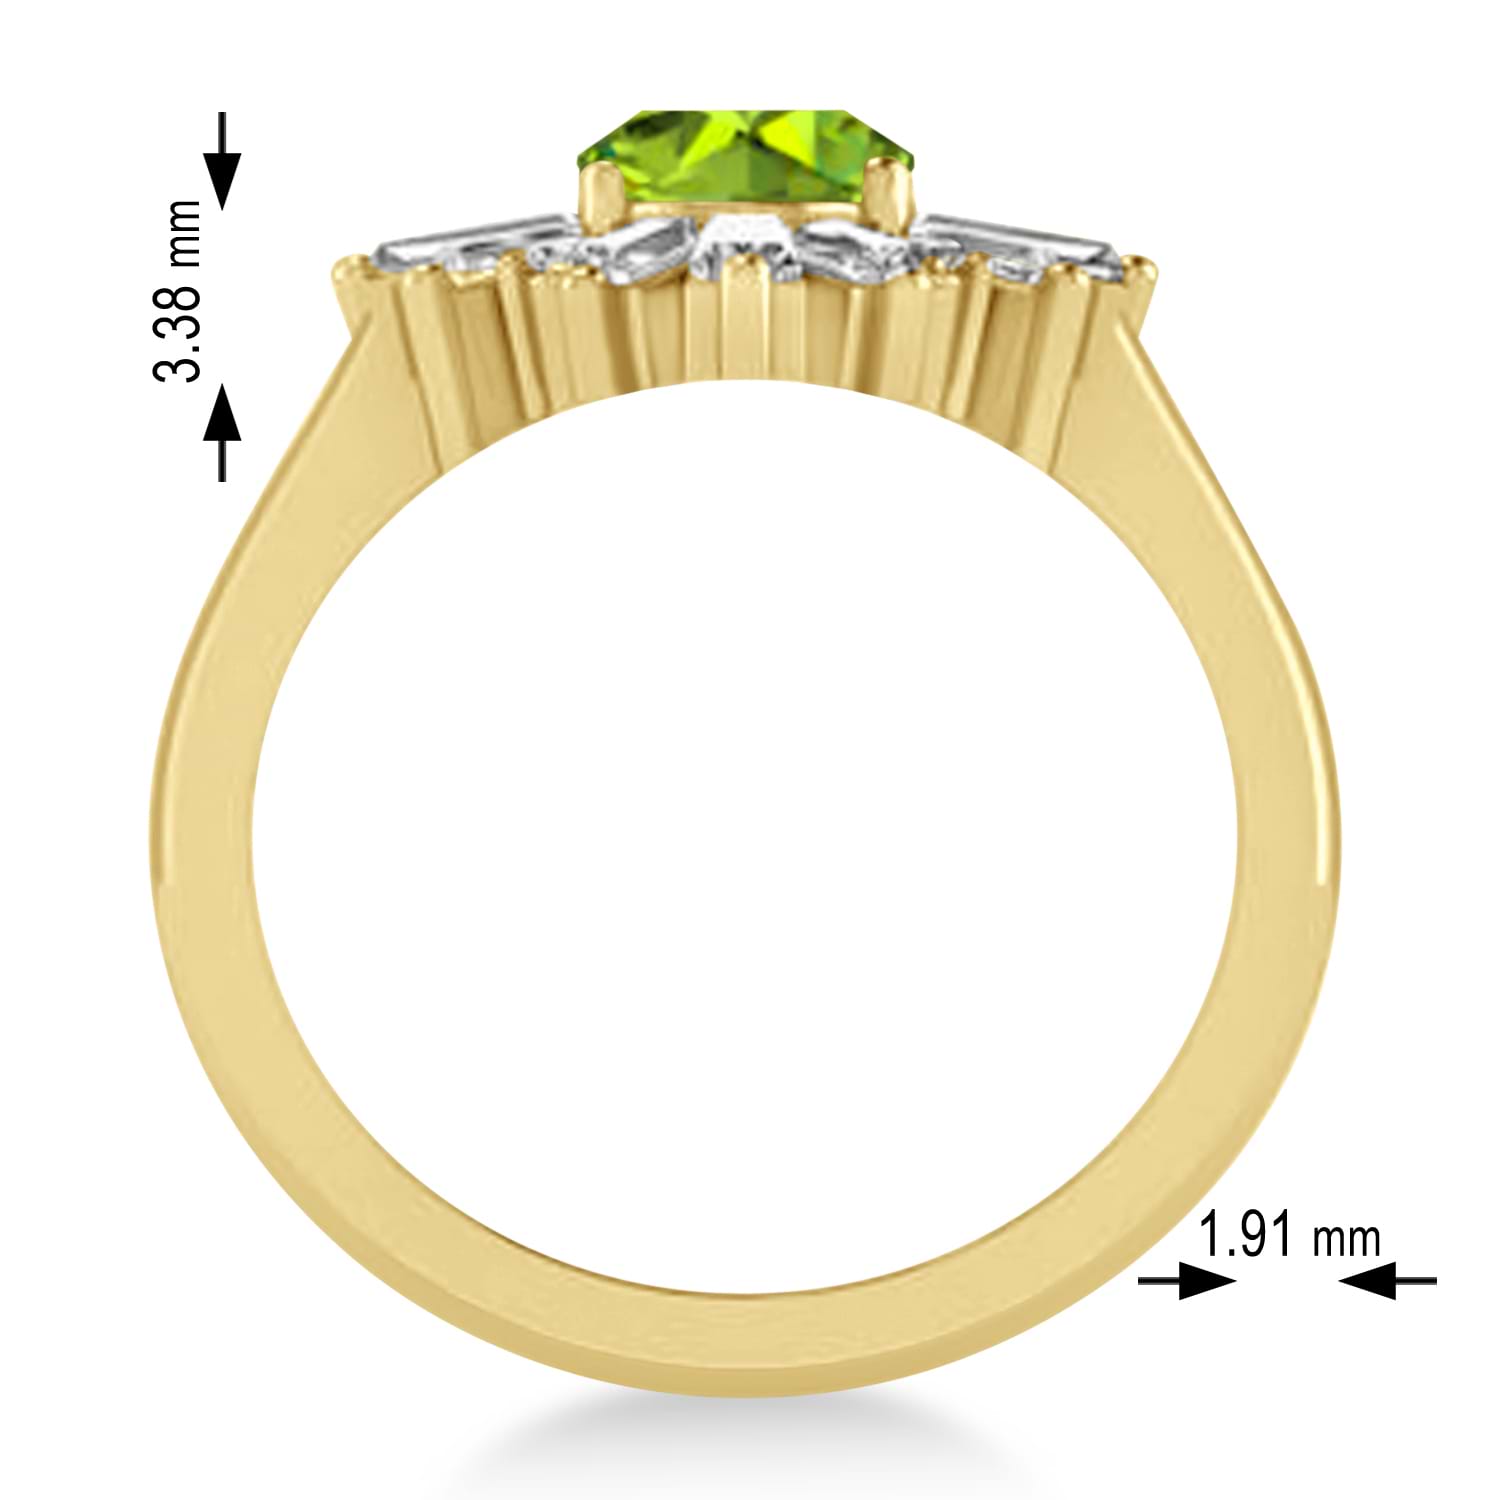 Peridot & Diamond Oval Cut Ballerina Engagement Ring 14k Yellow Gold (3.06 ctw)